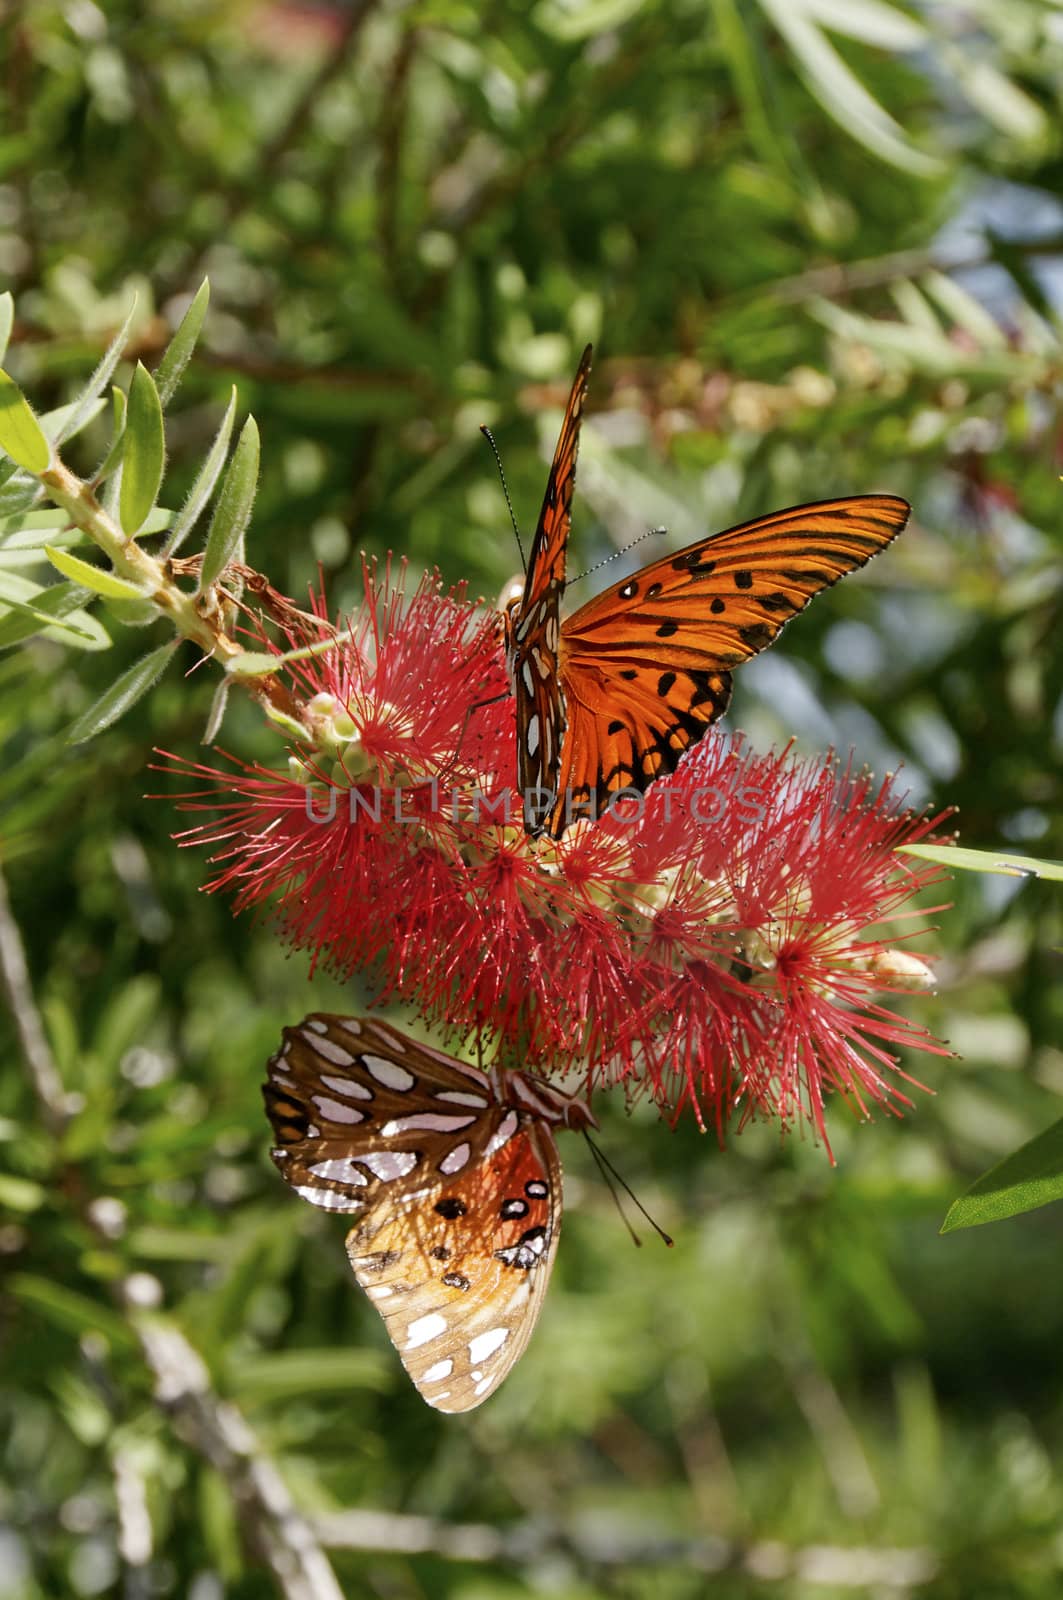 Two gulf fritillary butterflies on a red flower.